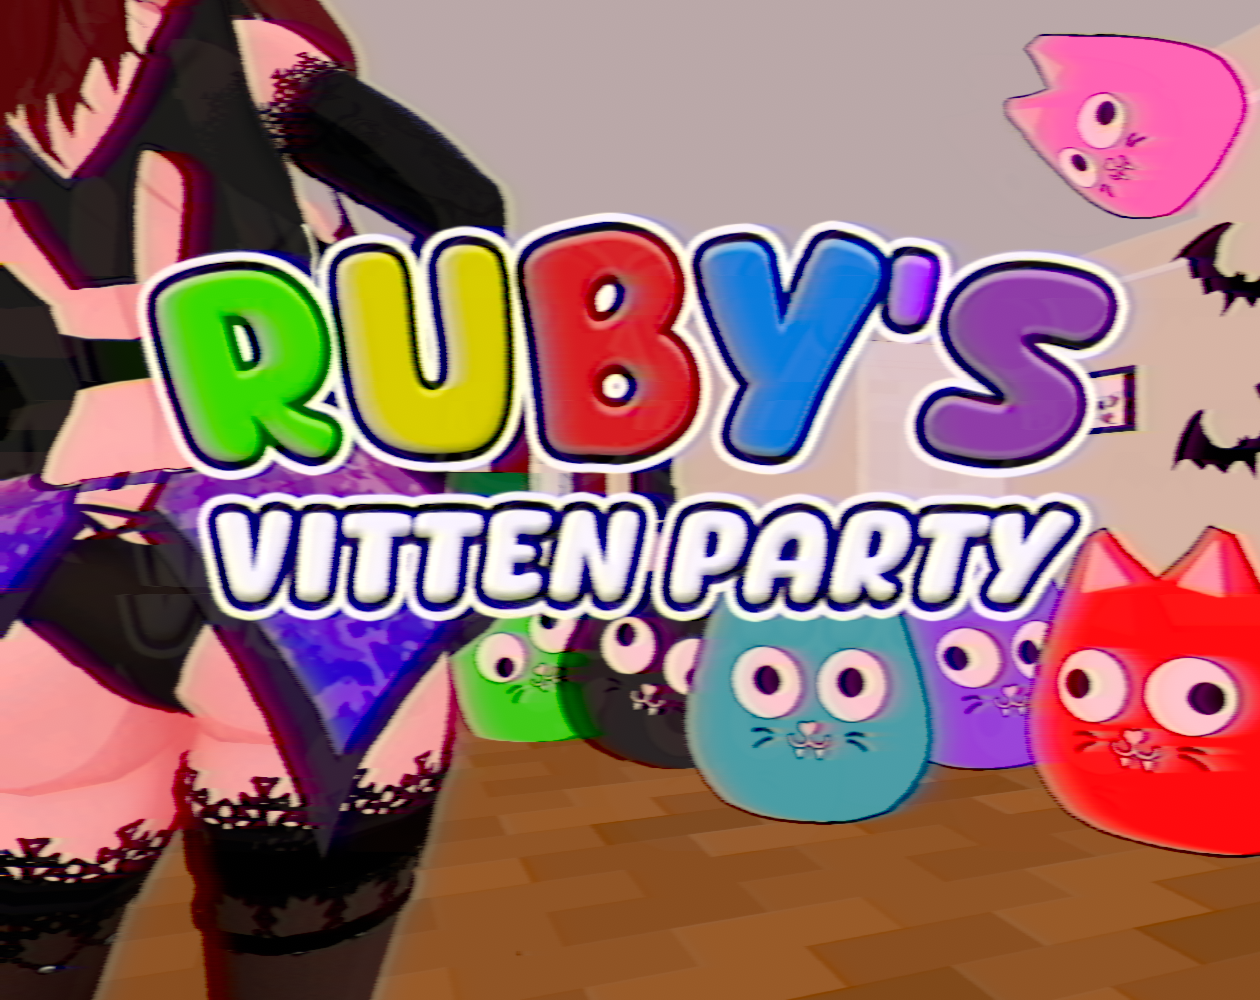 Ruby's Vitten Party